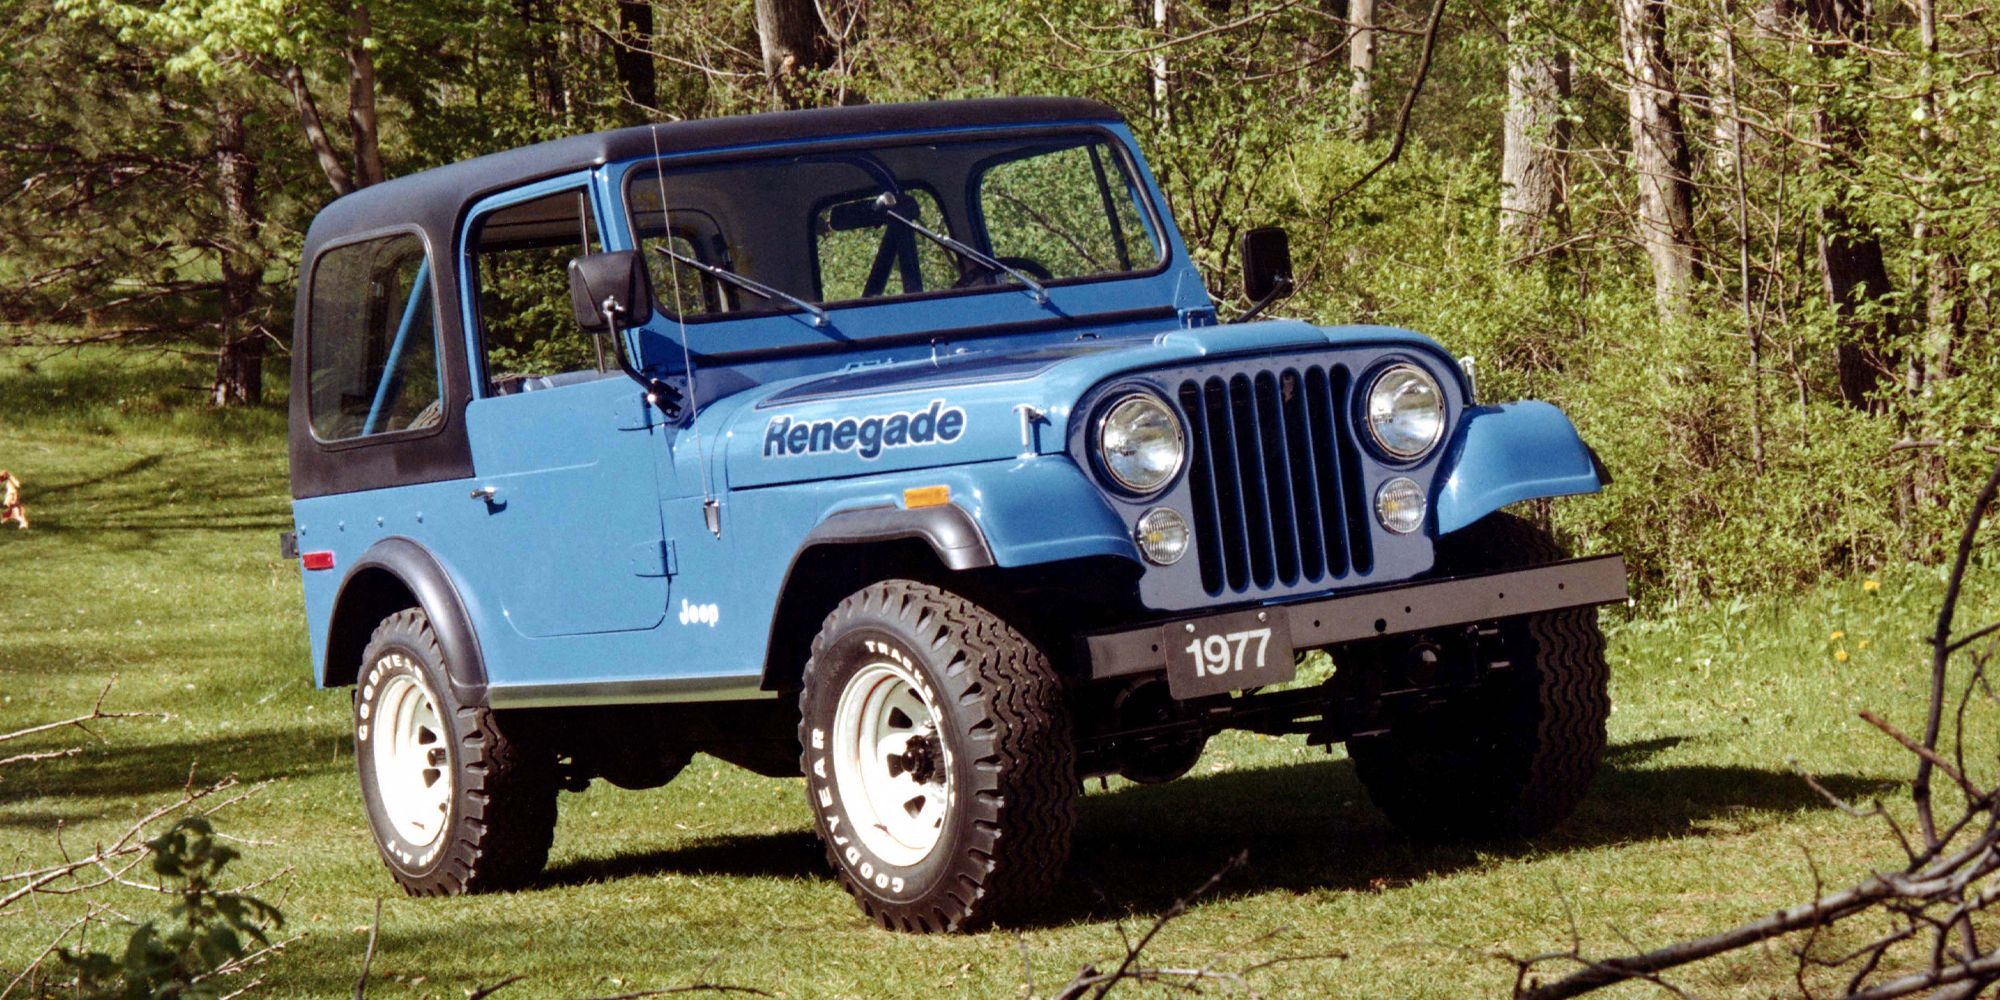 A blue Jeep CJ Renegade